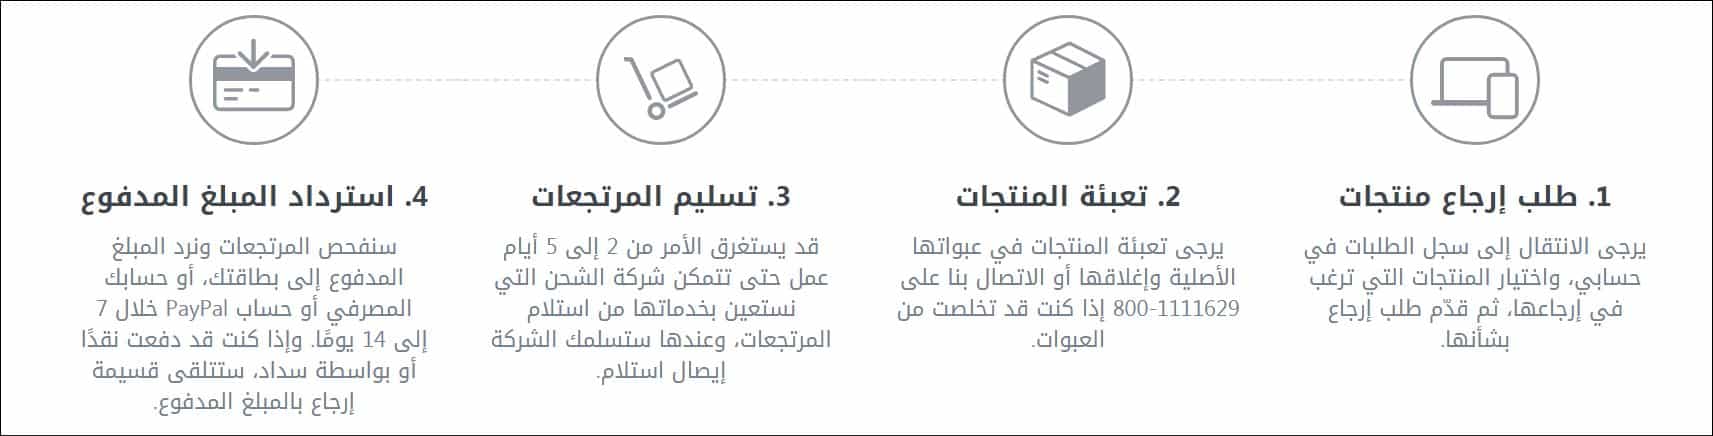 citymax السعودية خطوات الارجاع عبر الانترنت